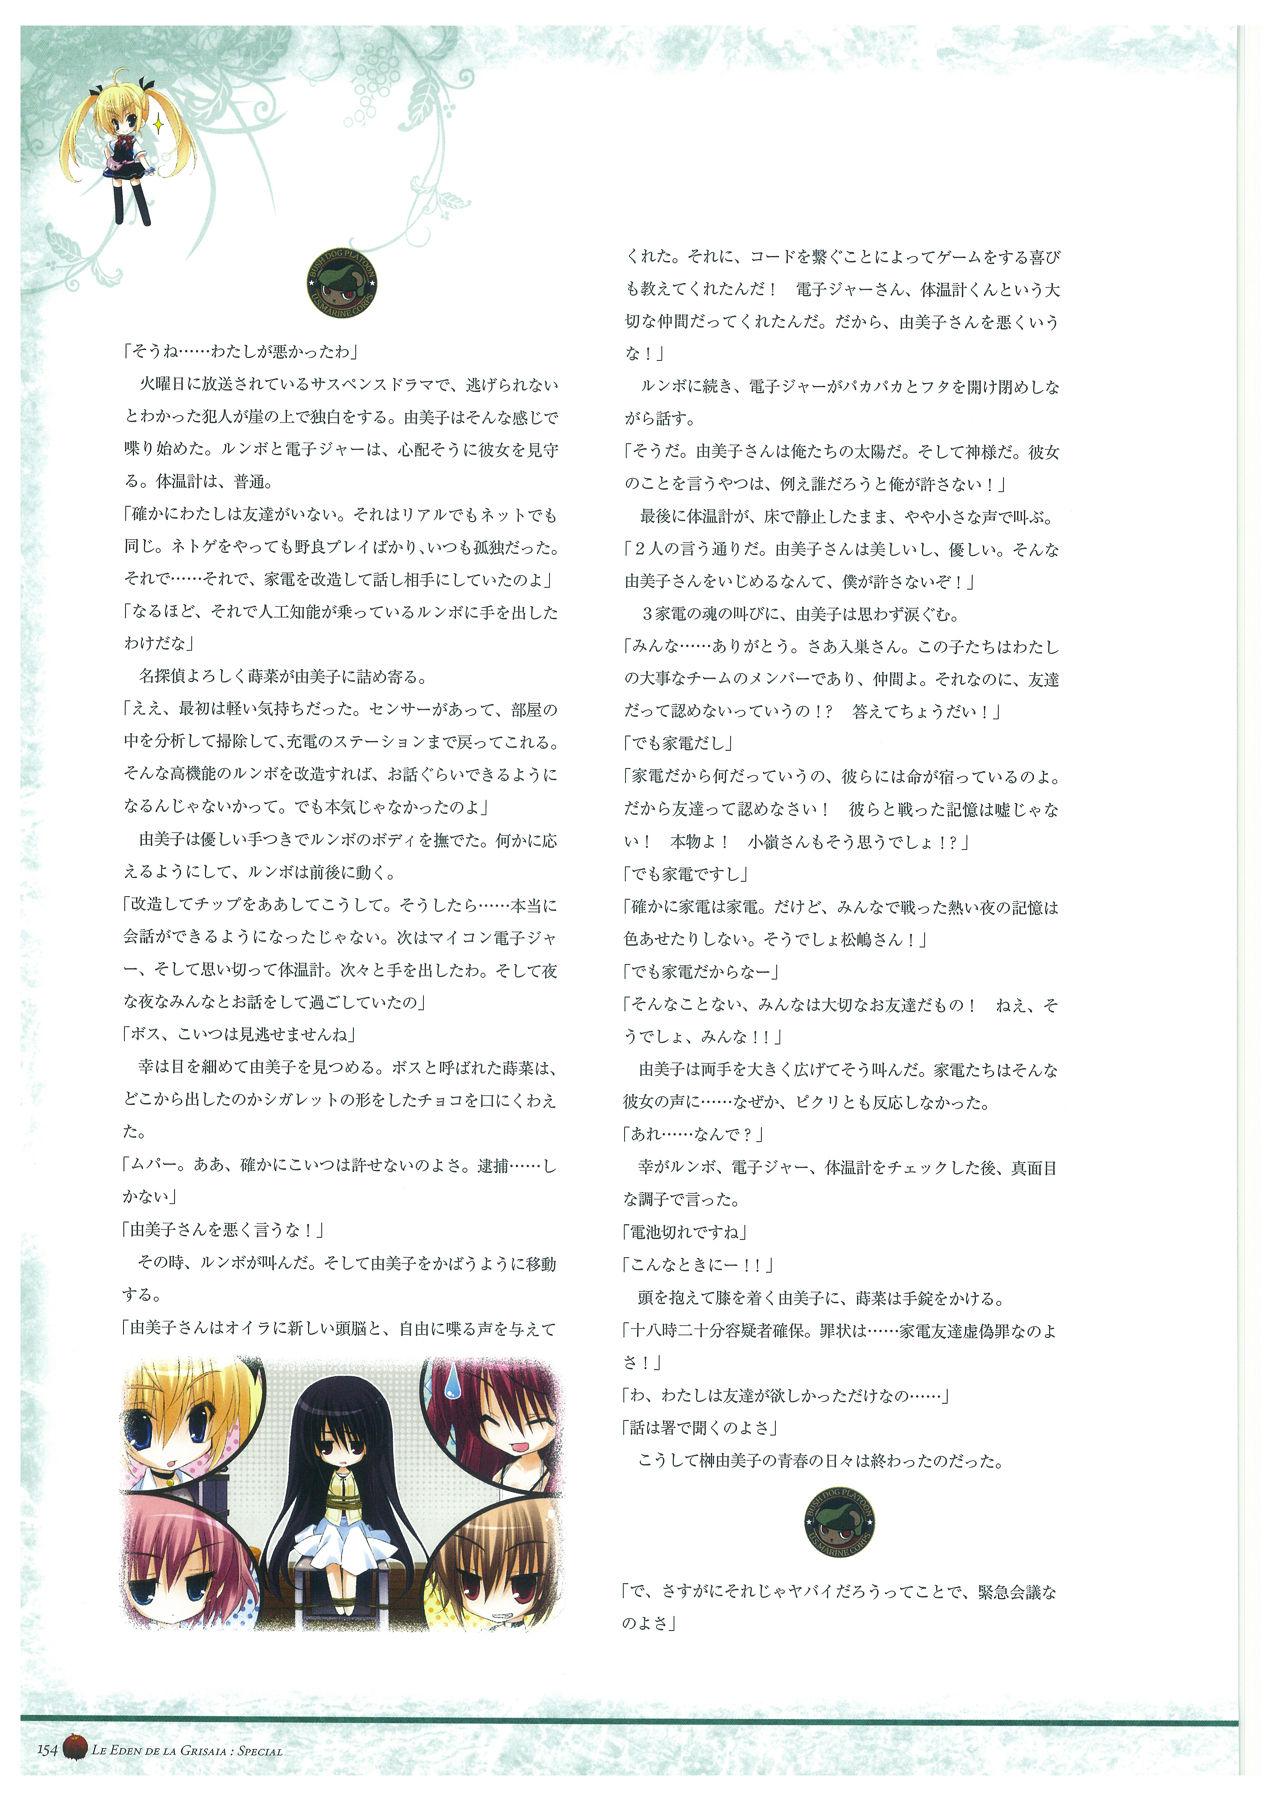 Grisaia no Rakuen Visual Fanbook 157